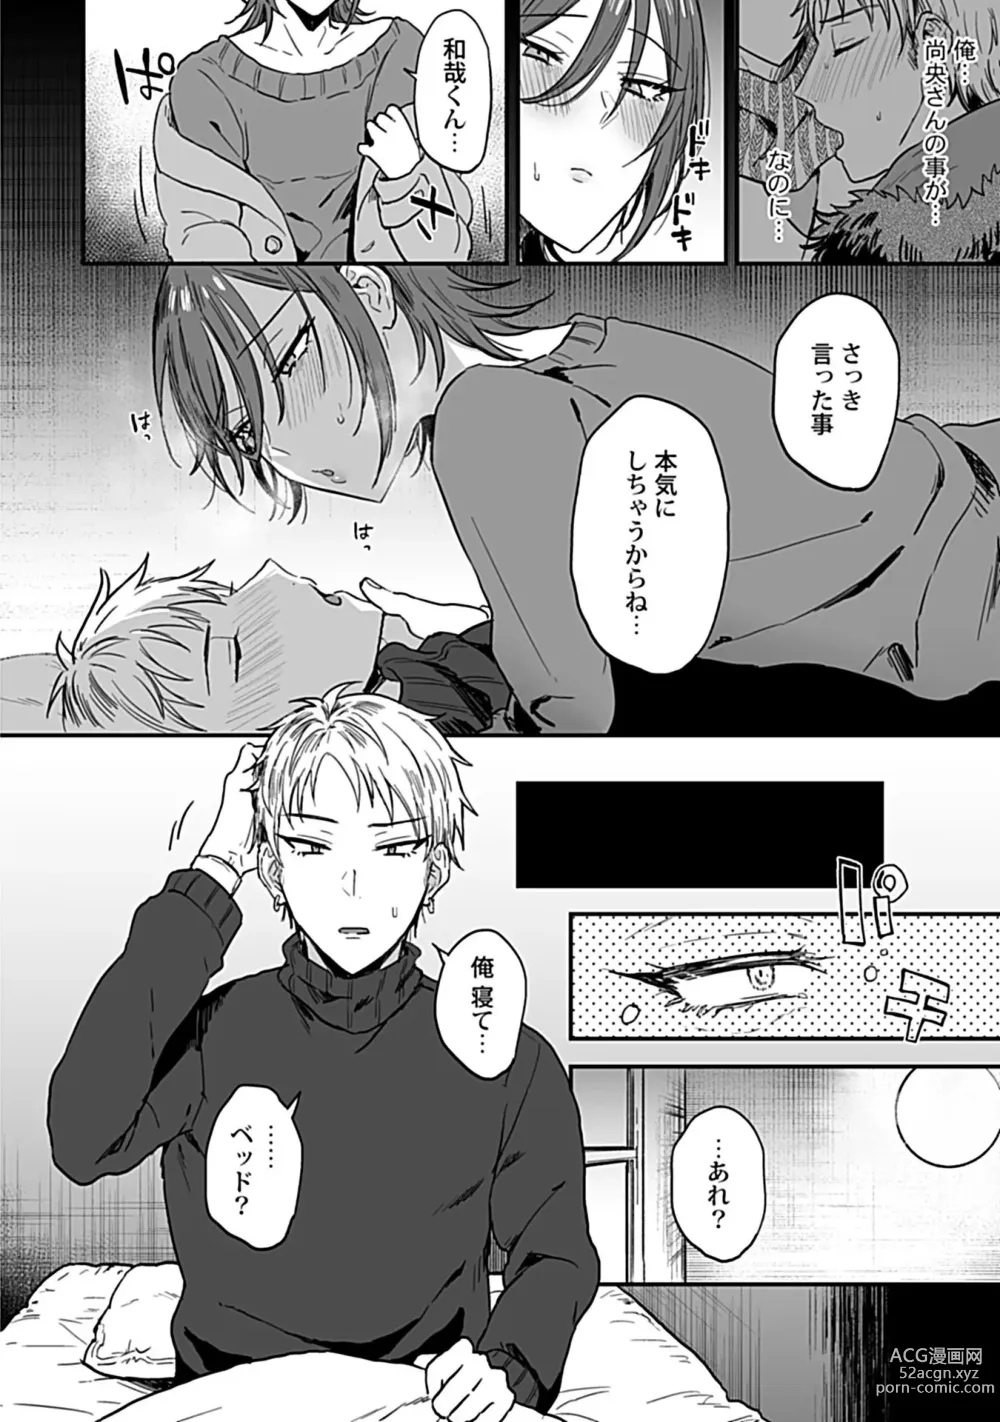 Page 6 of manga Tonari no Ecchi na Onii-san. 1 [R18 Ban] - The sexy boy who lives in the next!